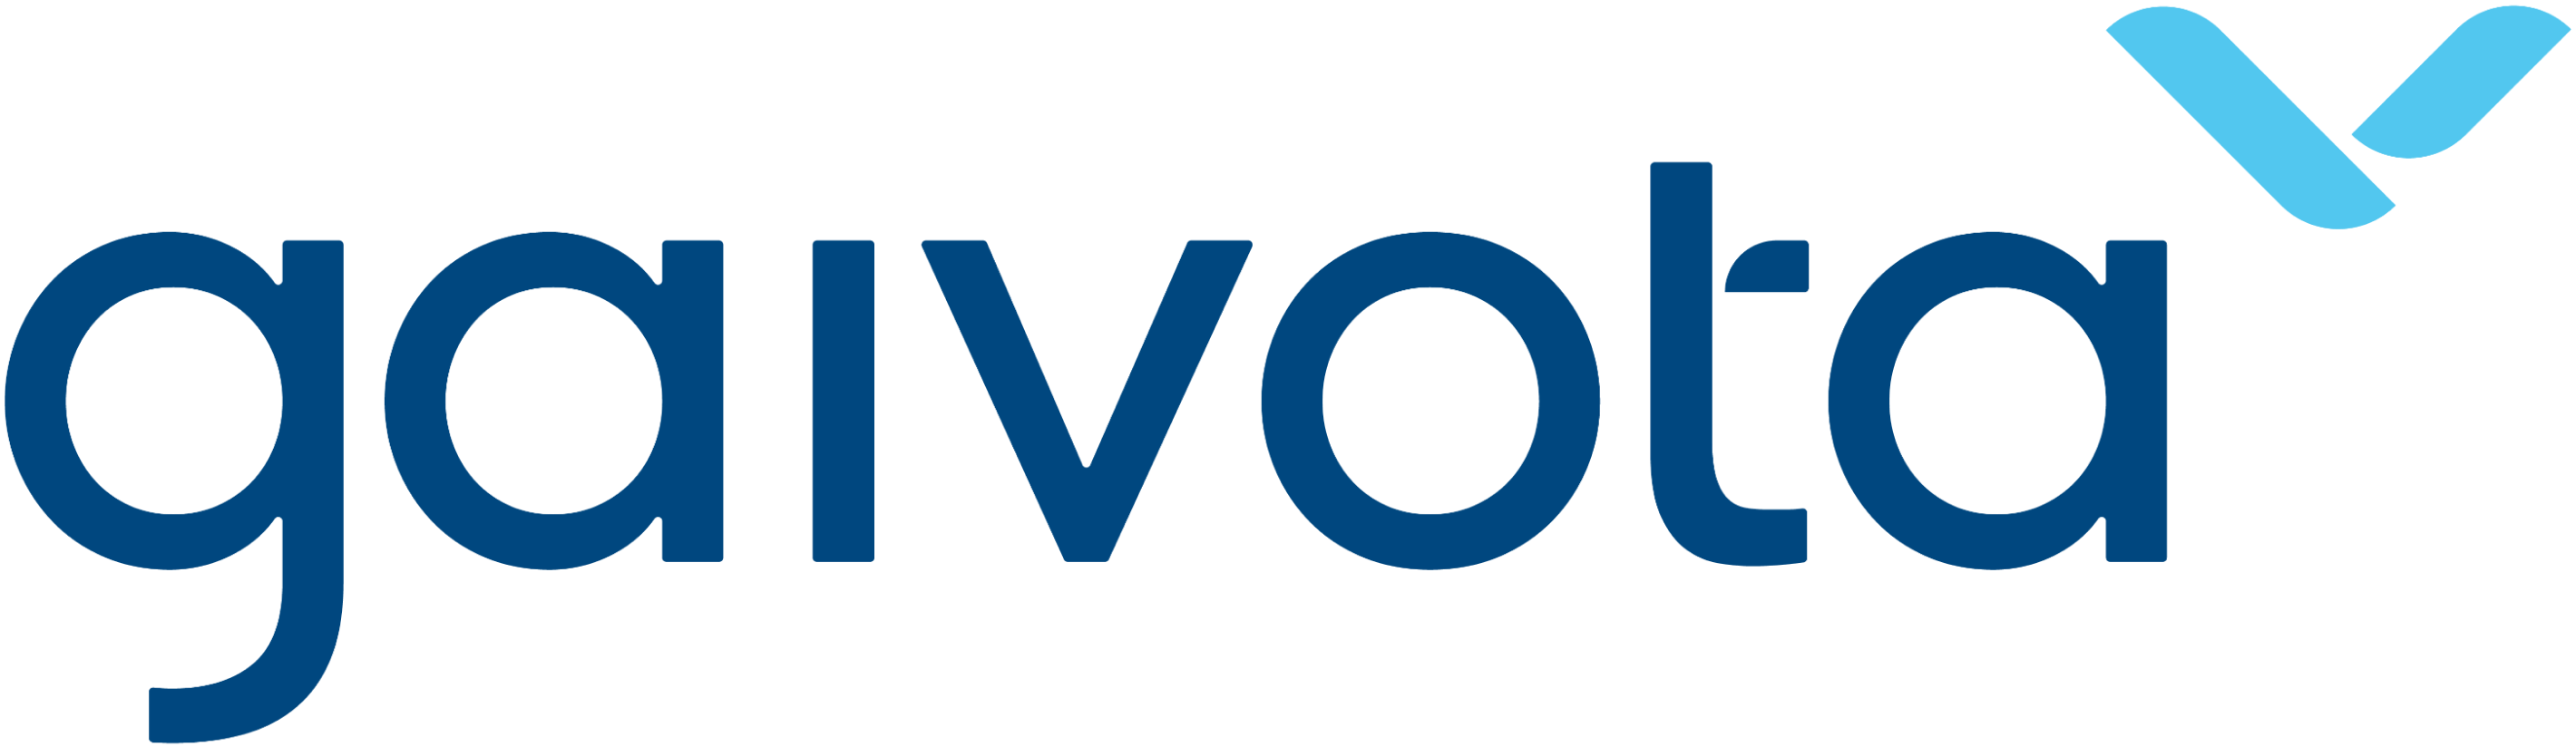 gaivota_logo_2 - Client logo